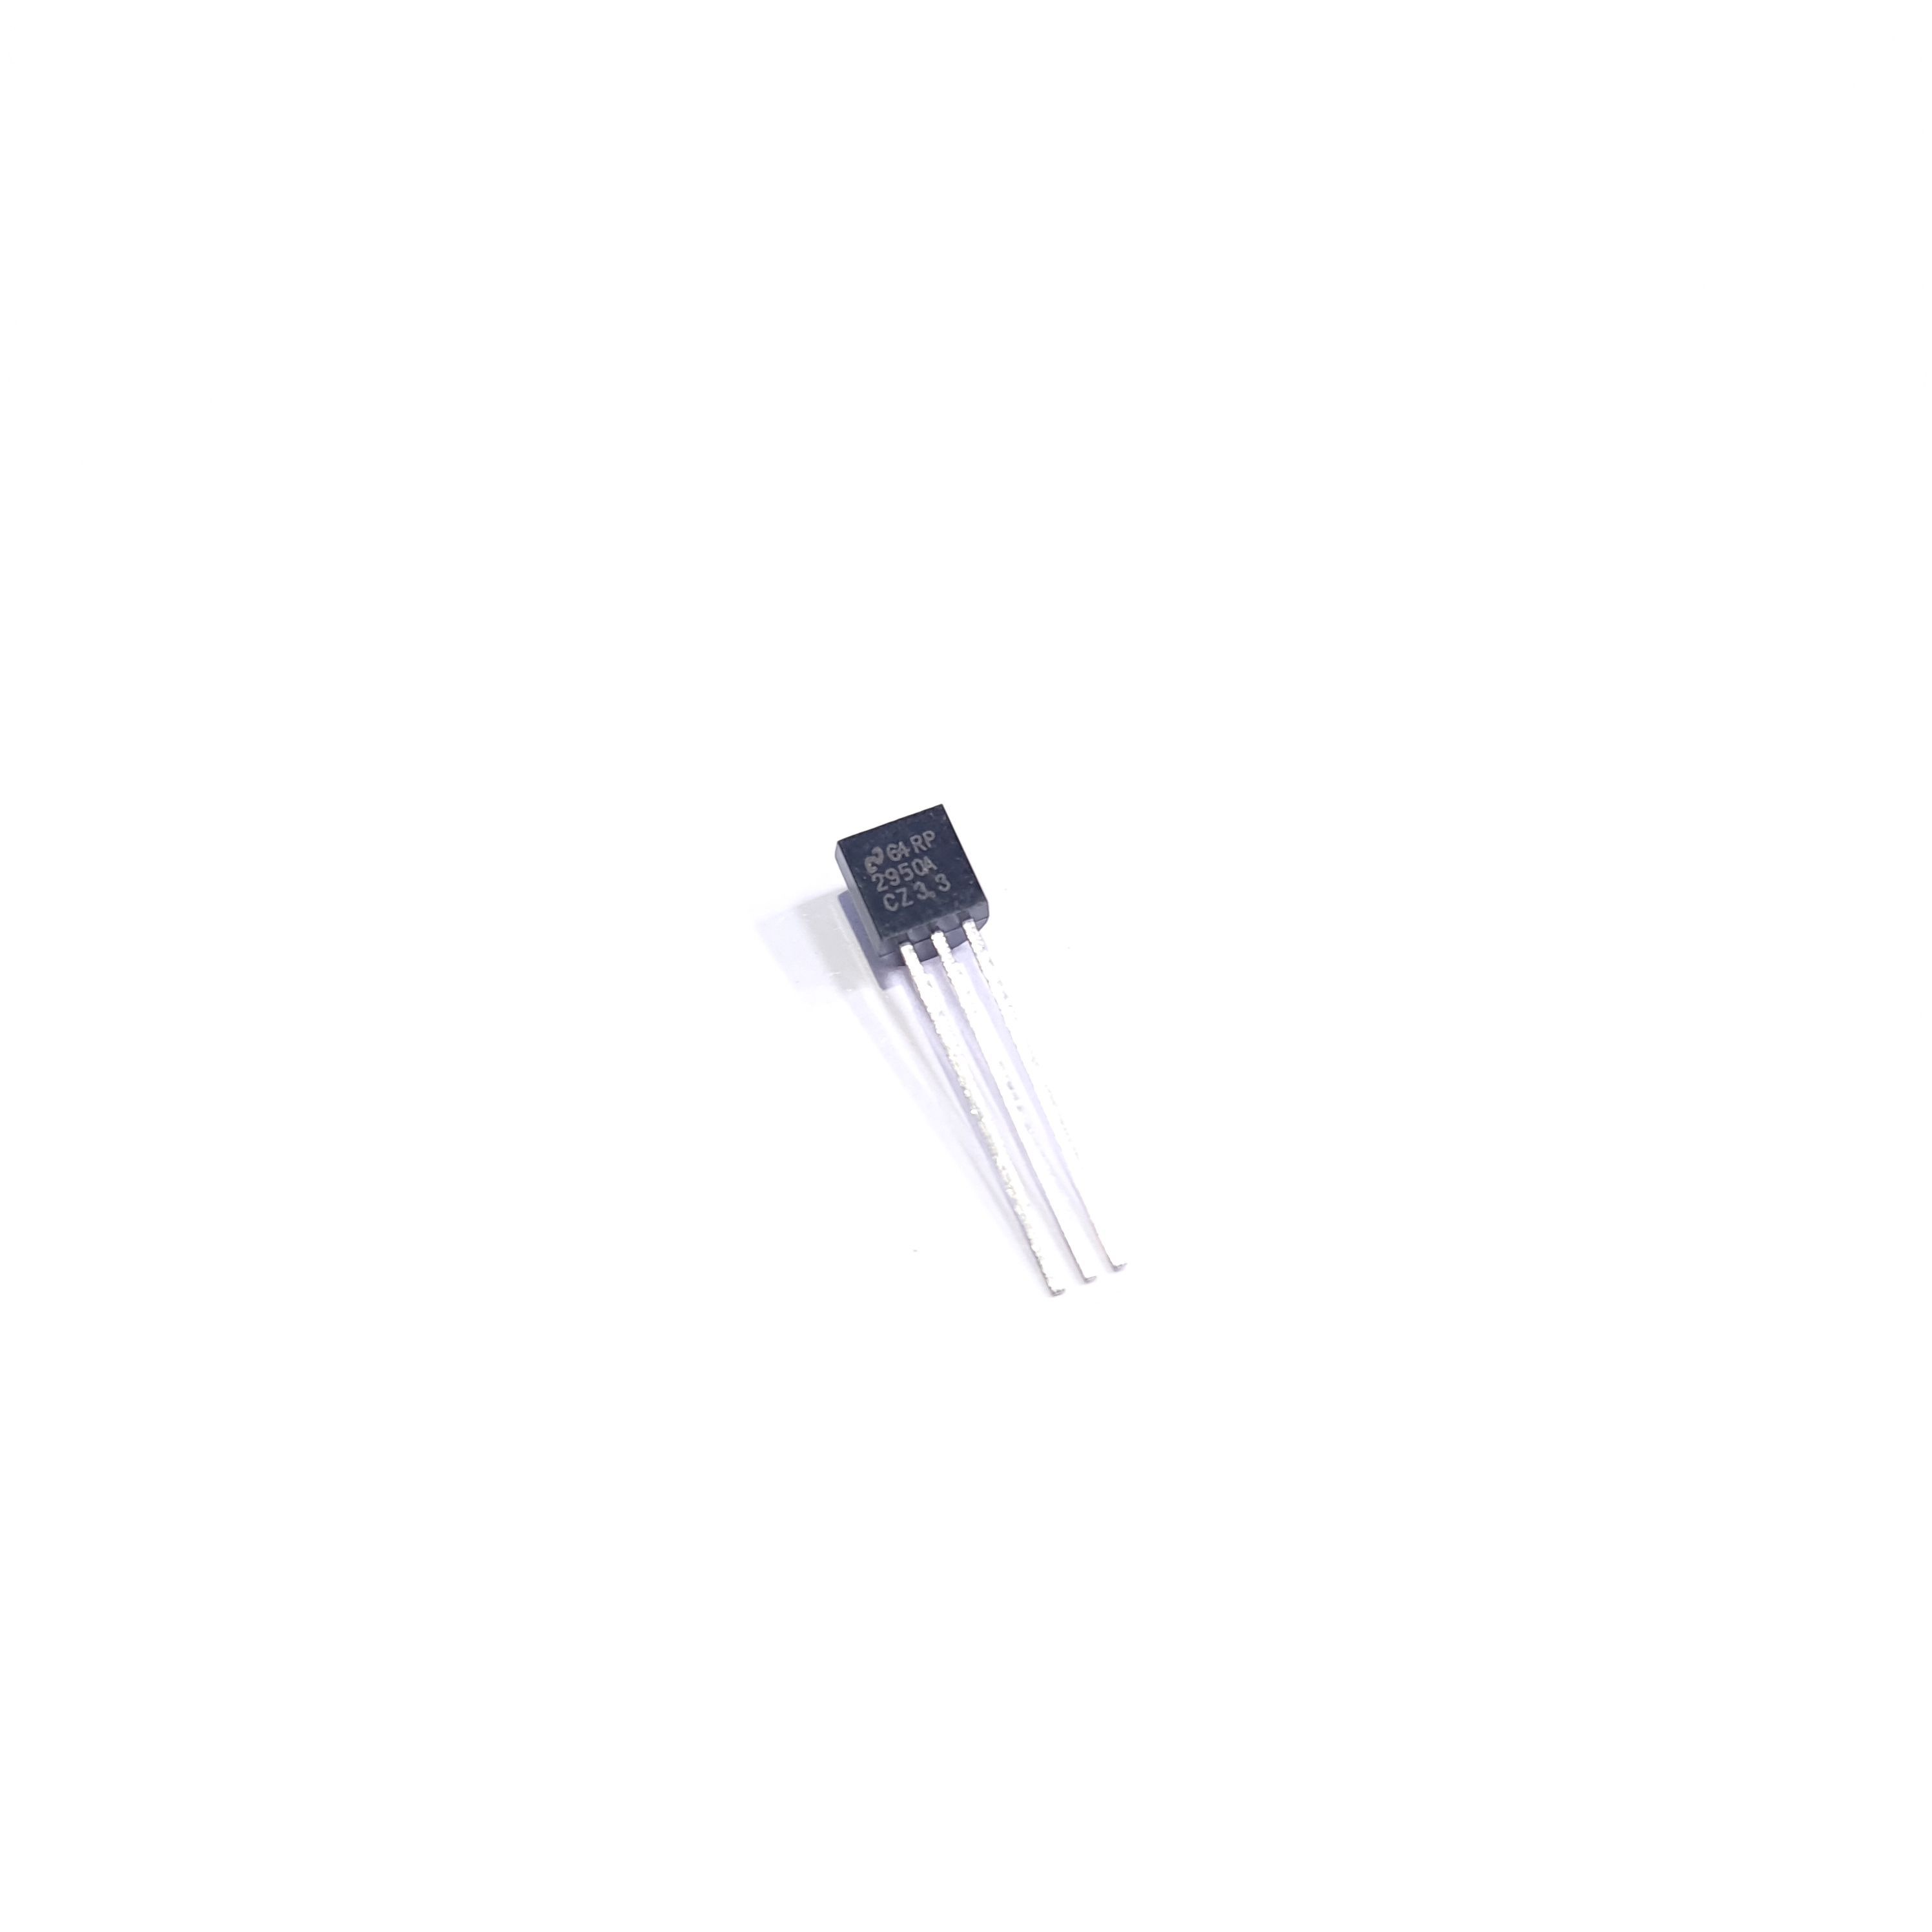 Микросхема LP2950ACZ-3.3 (маркировка 2950A) - 100 mA, Low Power Low Dropout Voltage Regulator, TO-92